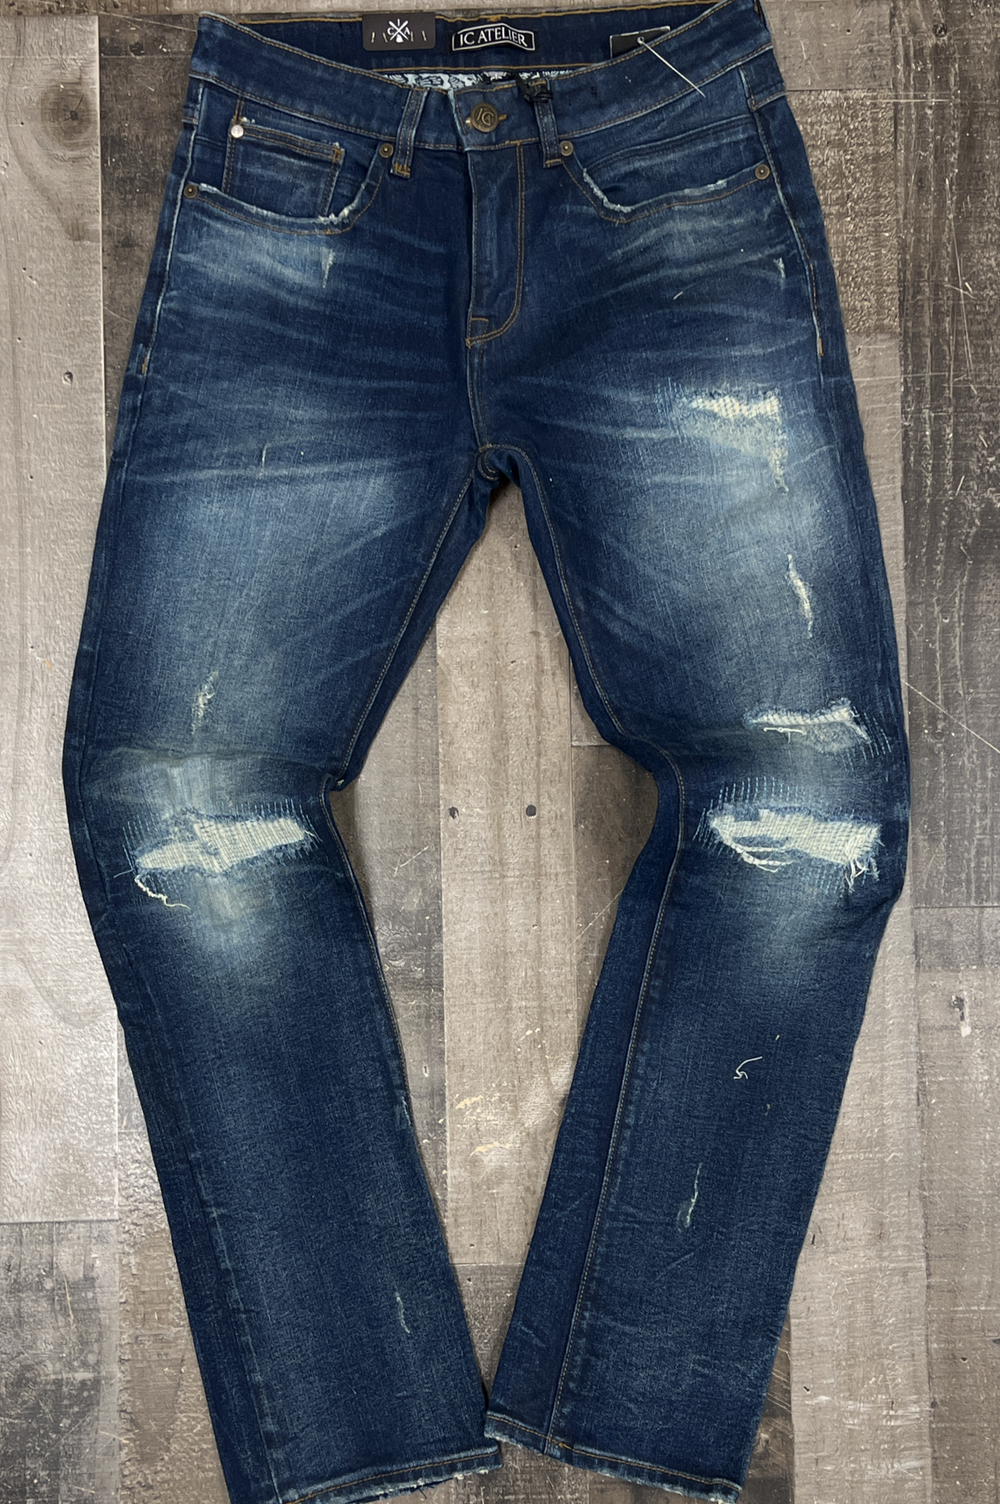 JC Atelier- denim jeans